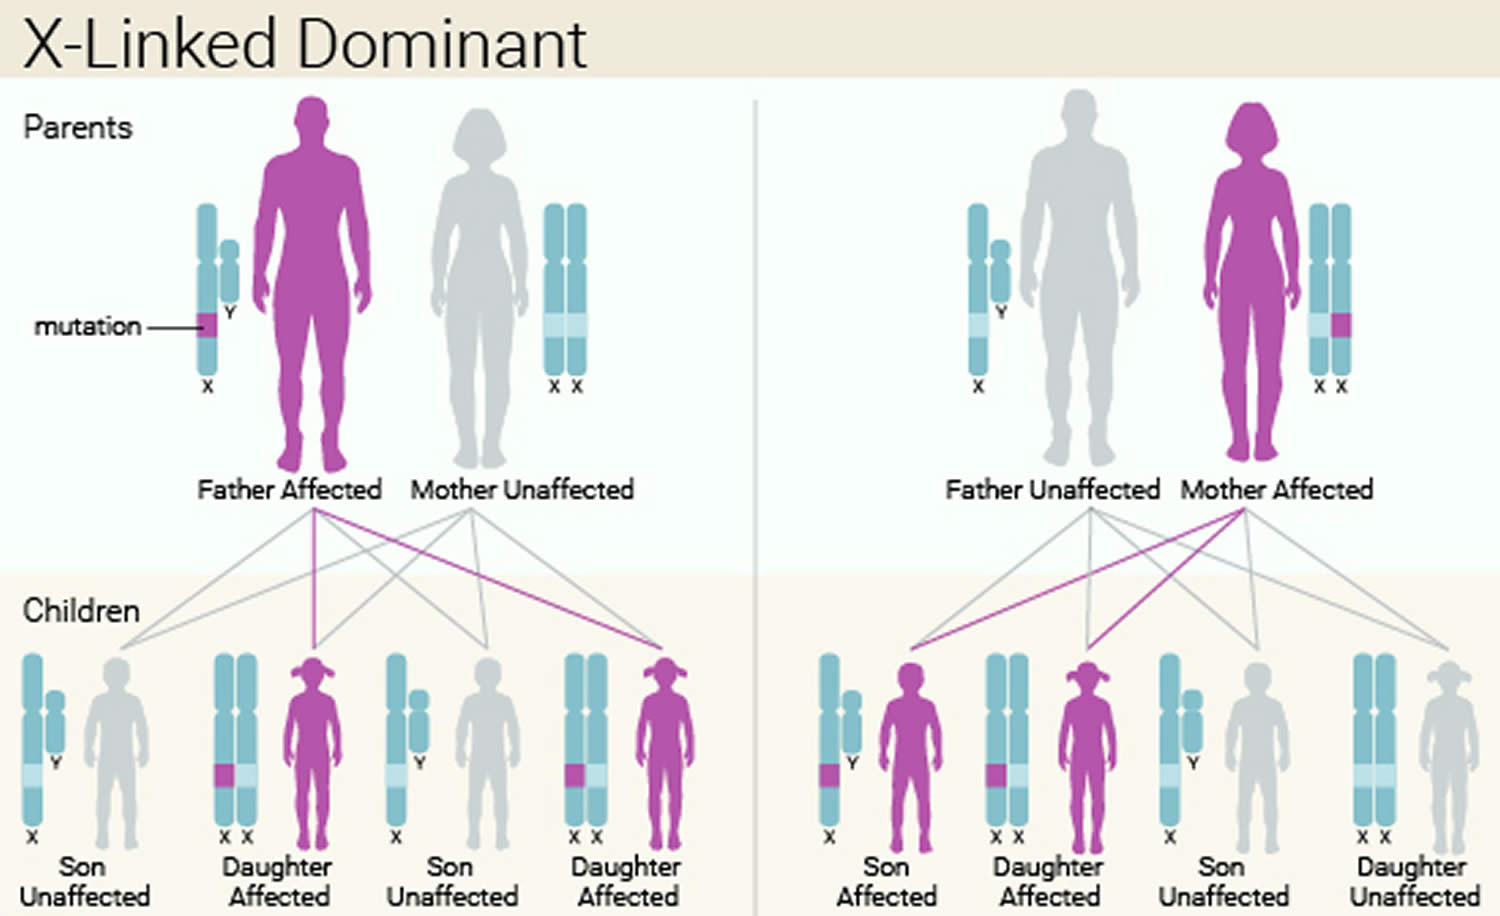 Fragile X syndrome X-linked Dominant inheritance pattern